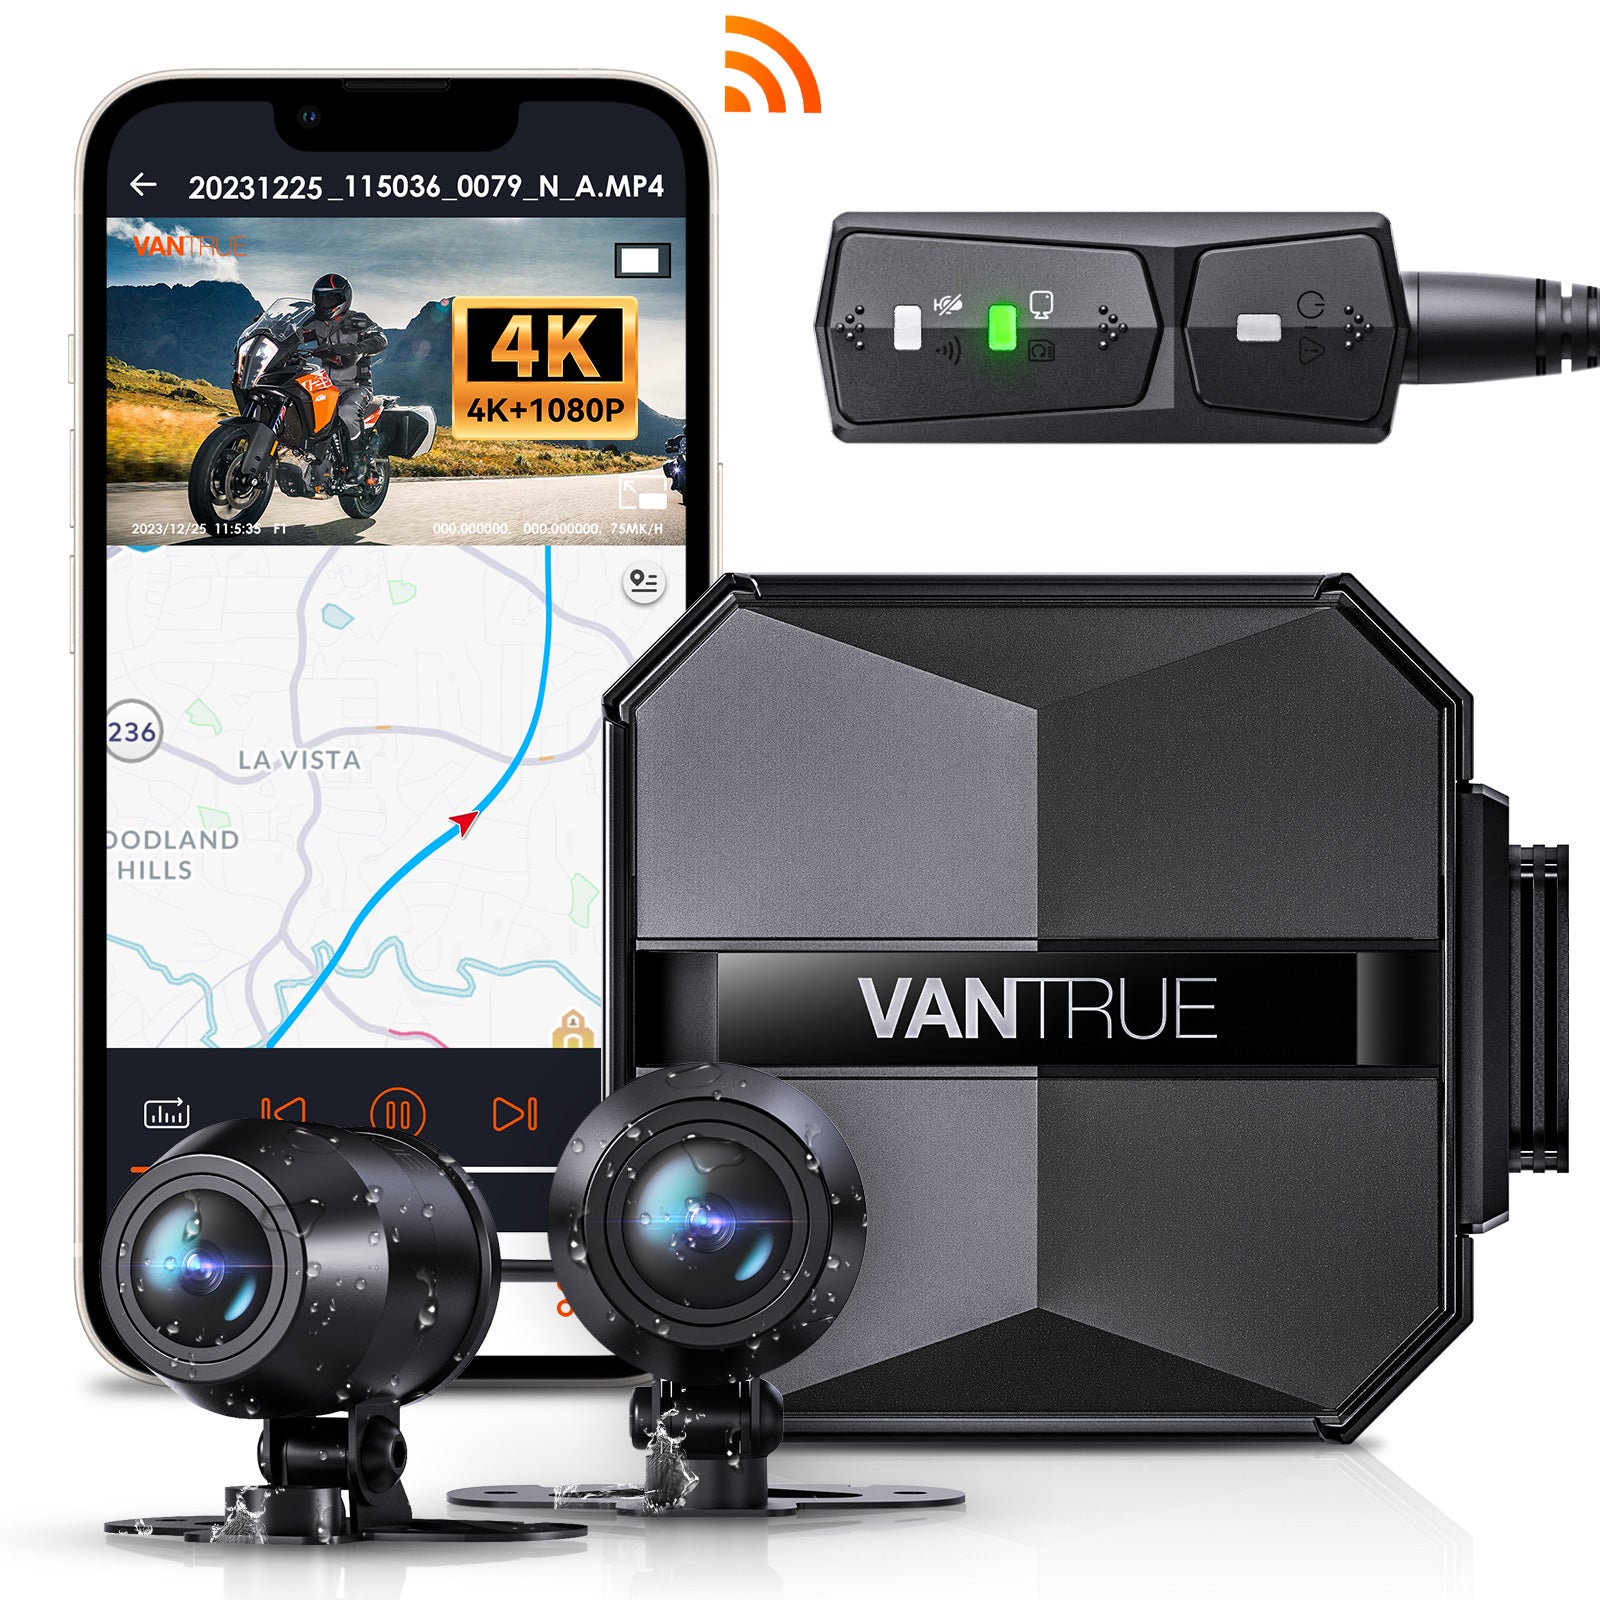 Vantrue F1 Motorcycle 4K Dashcam (4K + 1080P) GPS | WiFi | Parking Mod